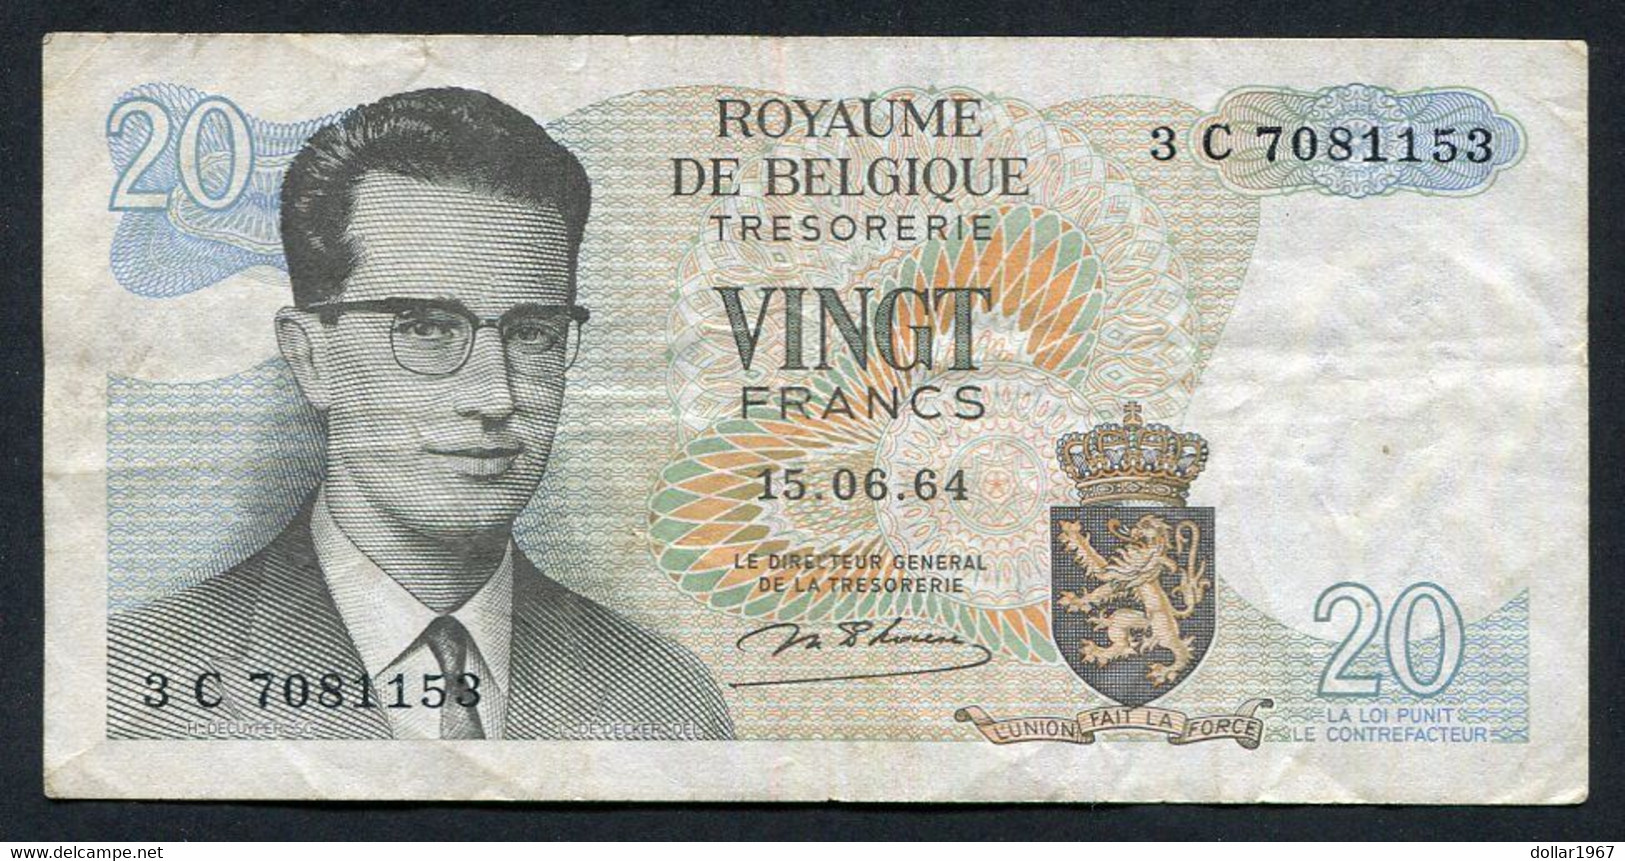 België Belgique Belgium 15 06 1964 -  20 Francs Atomium Baudouin.  3 C 7081153 - 20 Francs